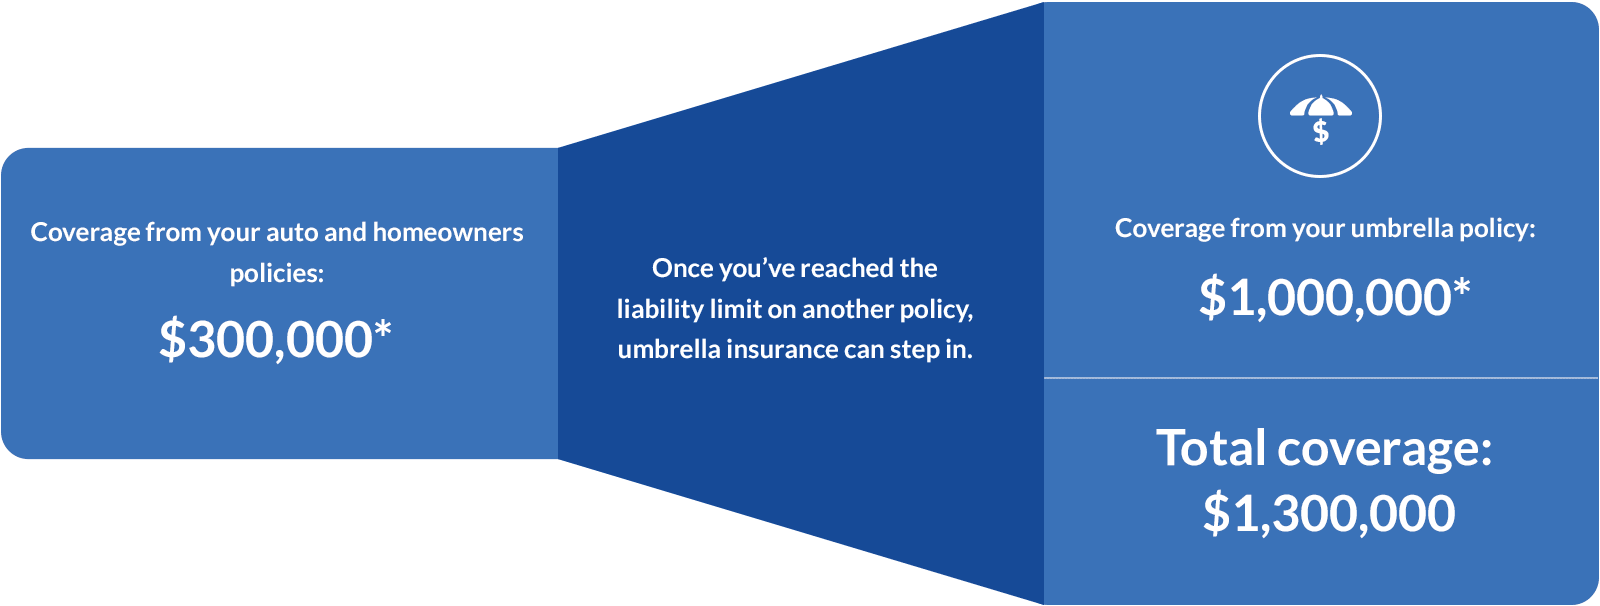 Umbrella Insurance Company with Logo - Umbrella Insurance - Get a Free Quote Today | GEICO